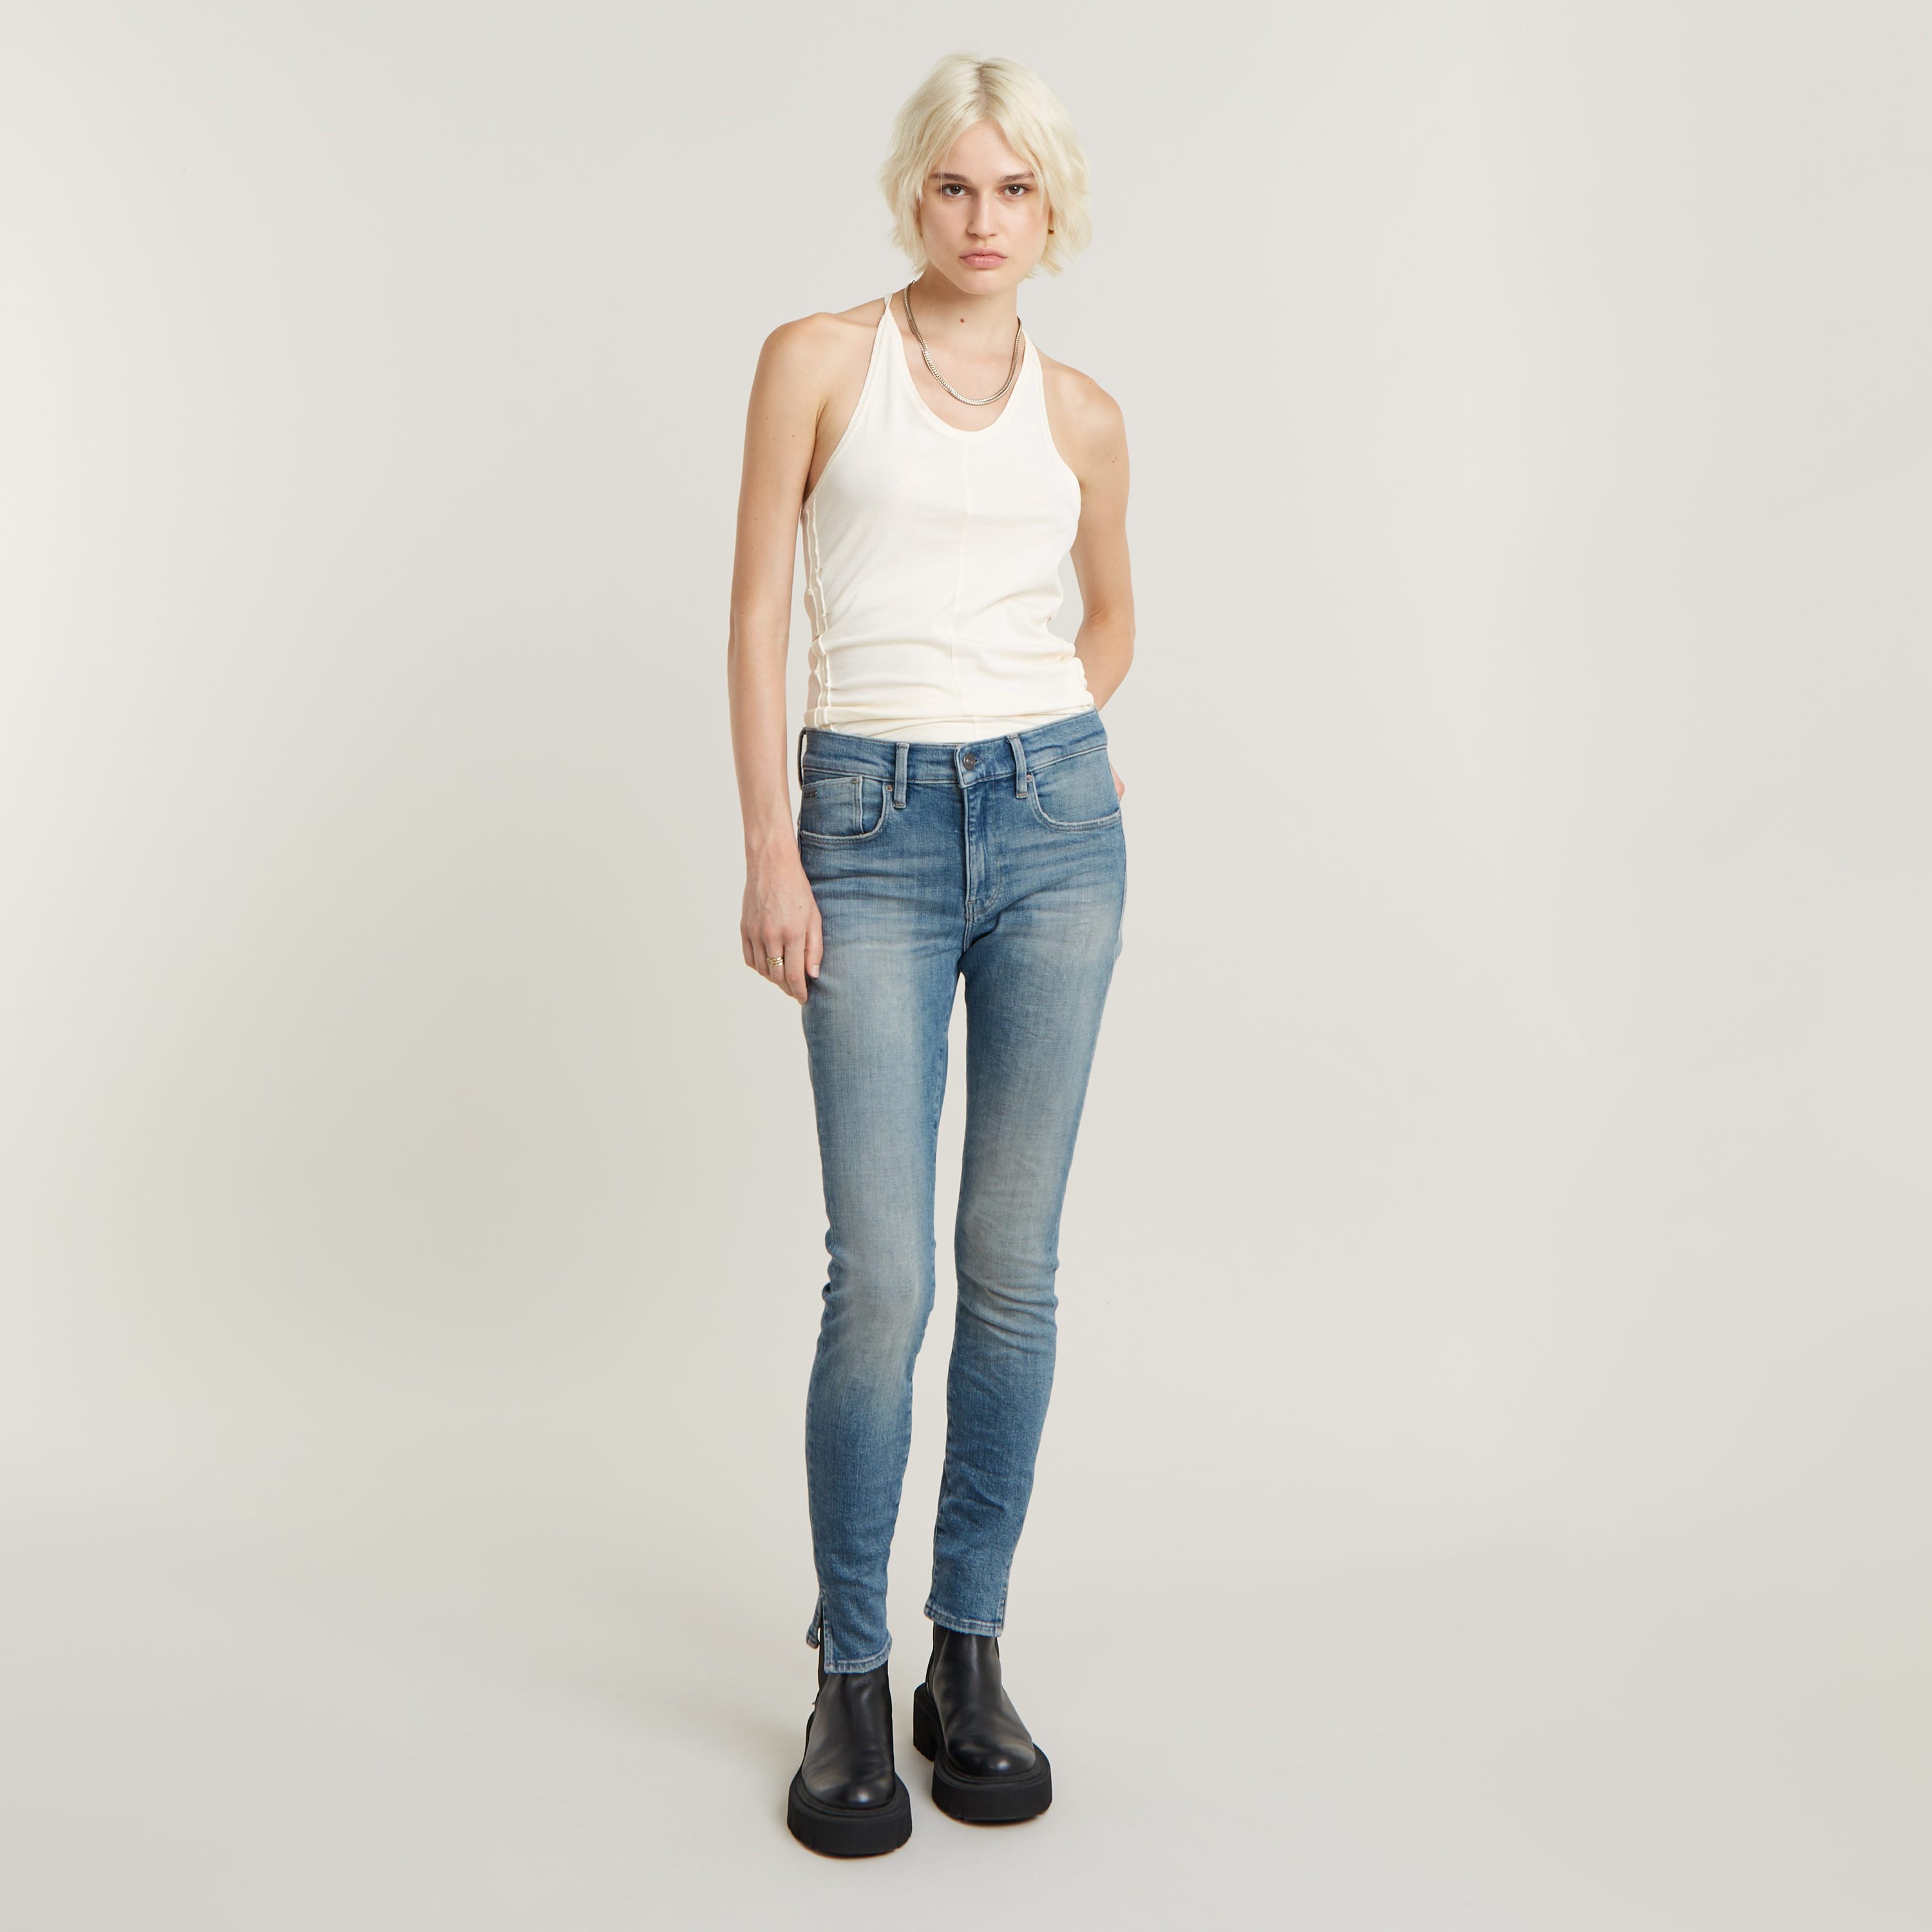 G-Star RAW Skinny fit jeans Lhana Skinny Jeans met wellnessfactor door het stretchaandeel